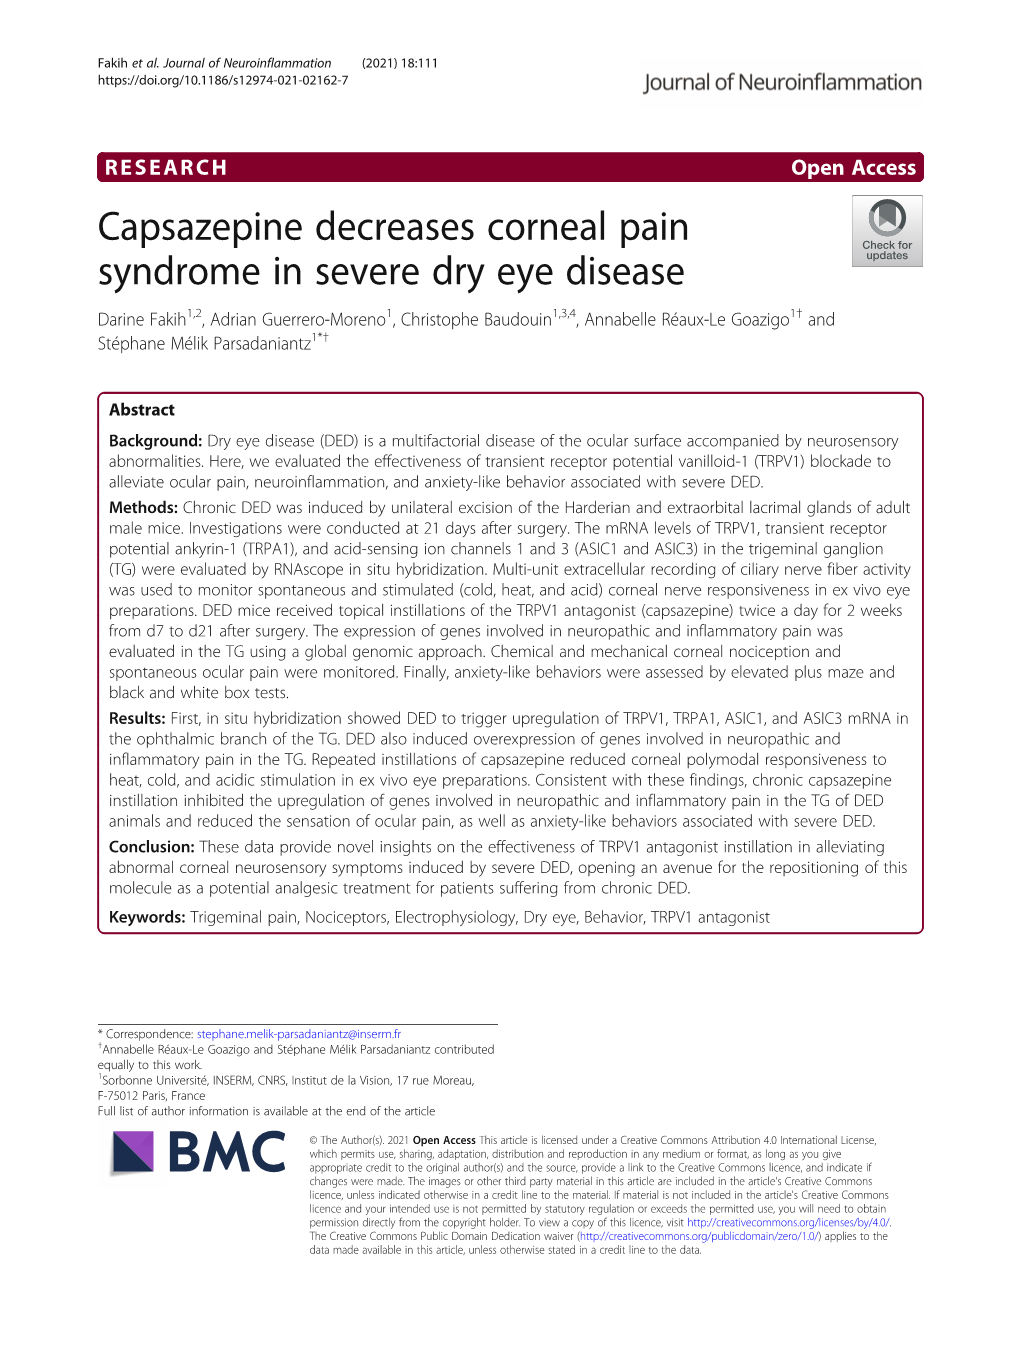 Capsazepine Decreases Corneal Pain Syndrome in Severe Dry Eye Disease